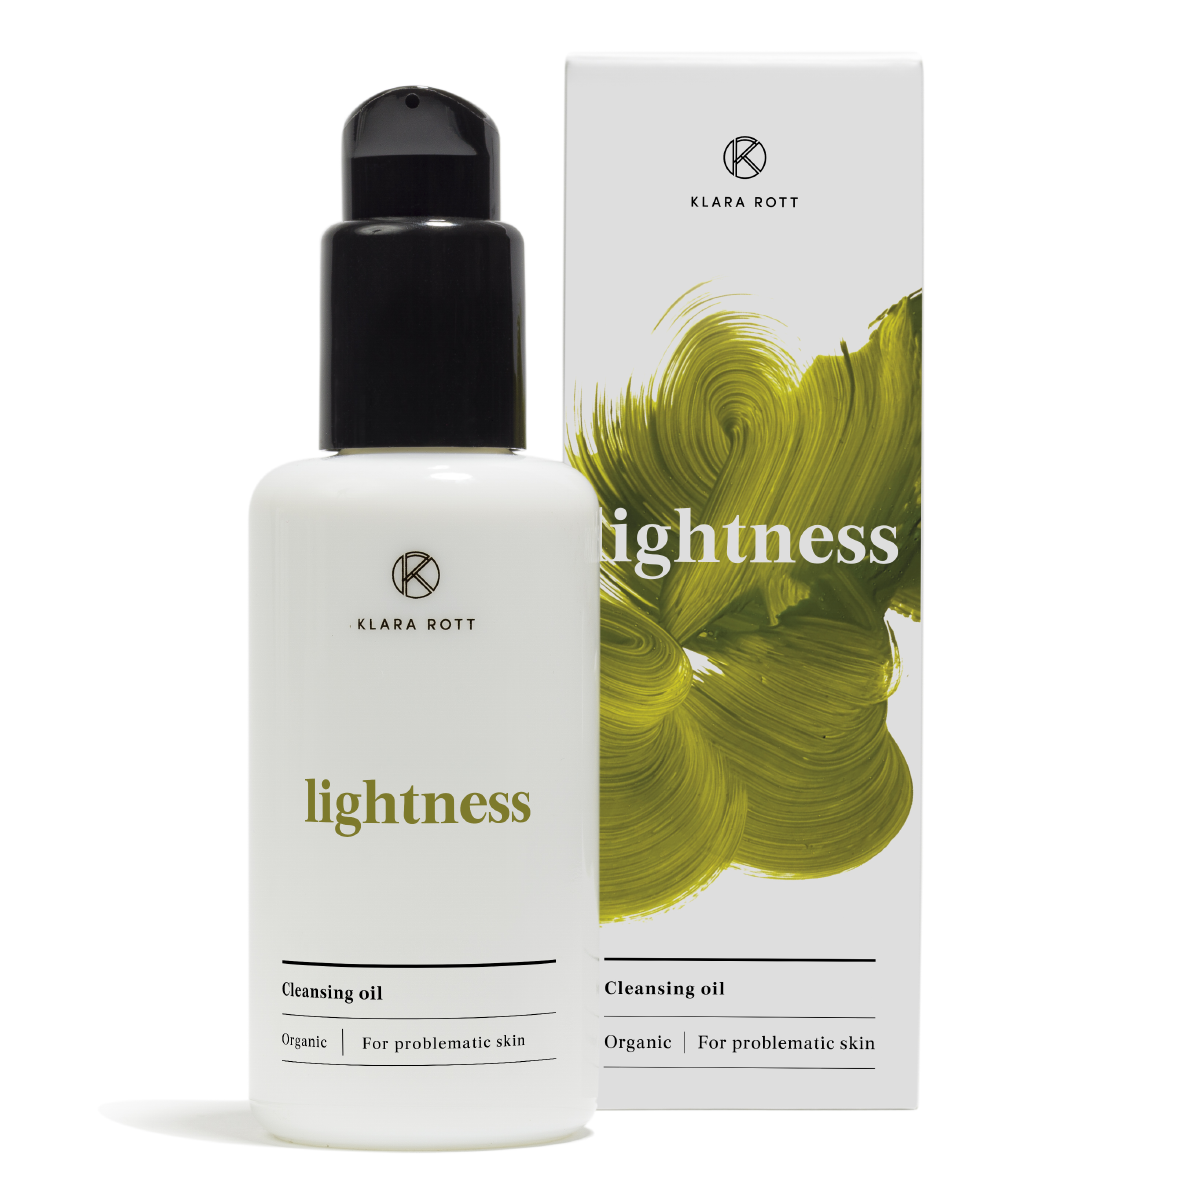 Lightness - Nourishing cleansing oil for problematic skin 